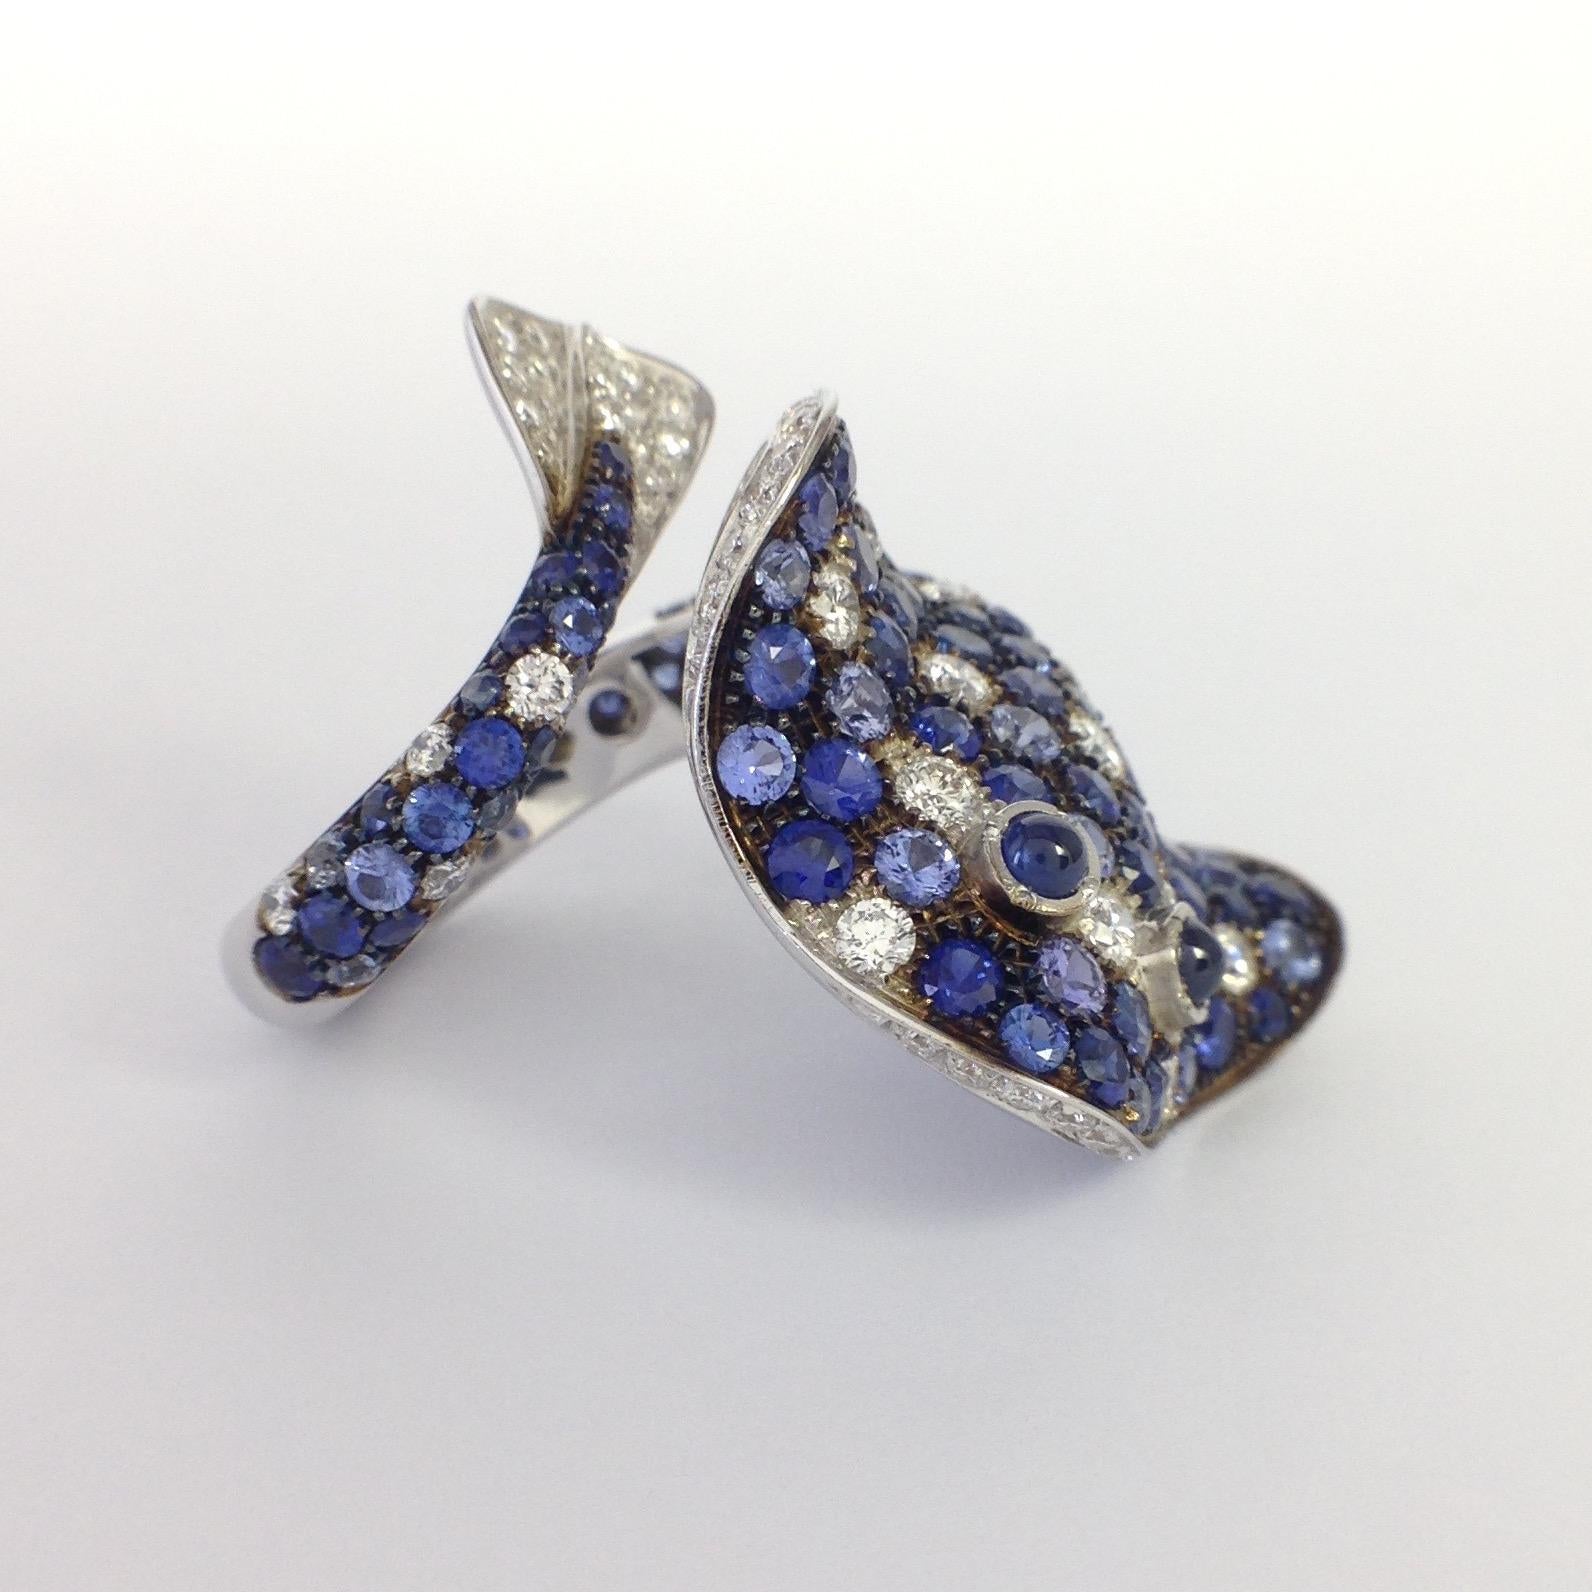 Ray Fish White Diamond Blue Sapphire 18 Karat Gold Ring Made in Italy Petronilla 7